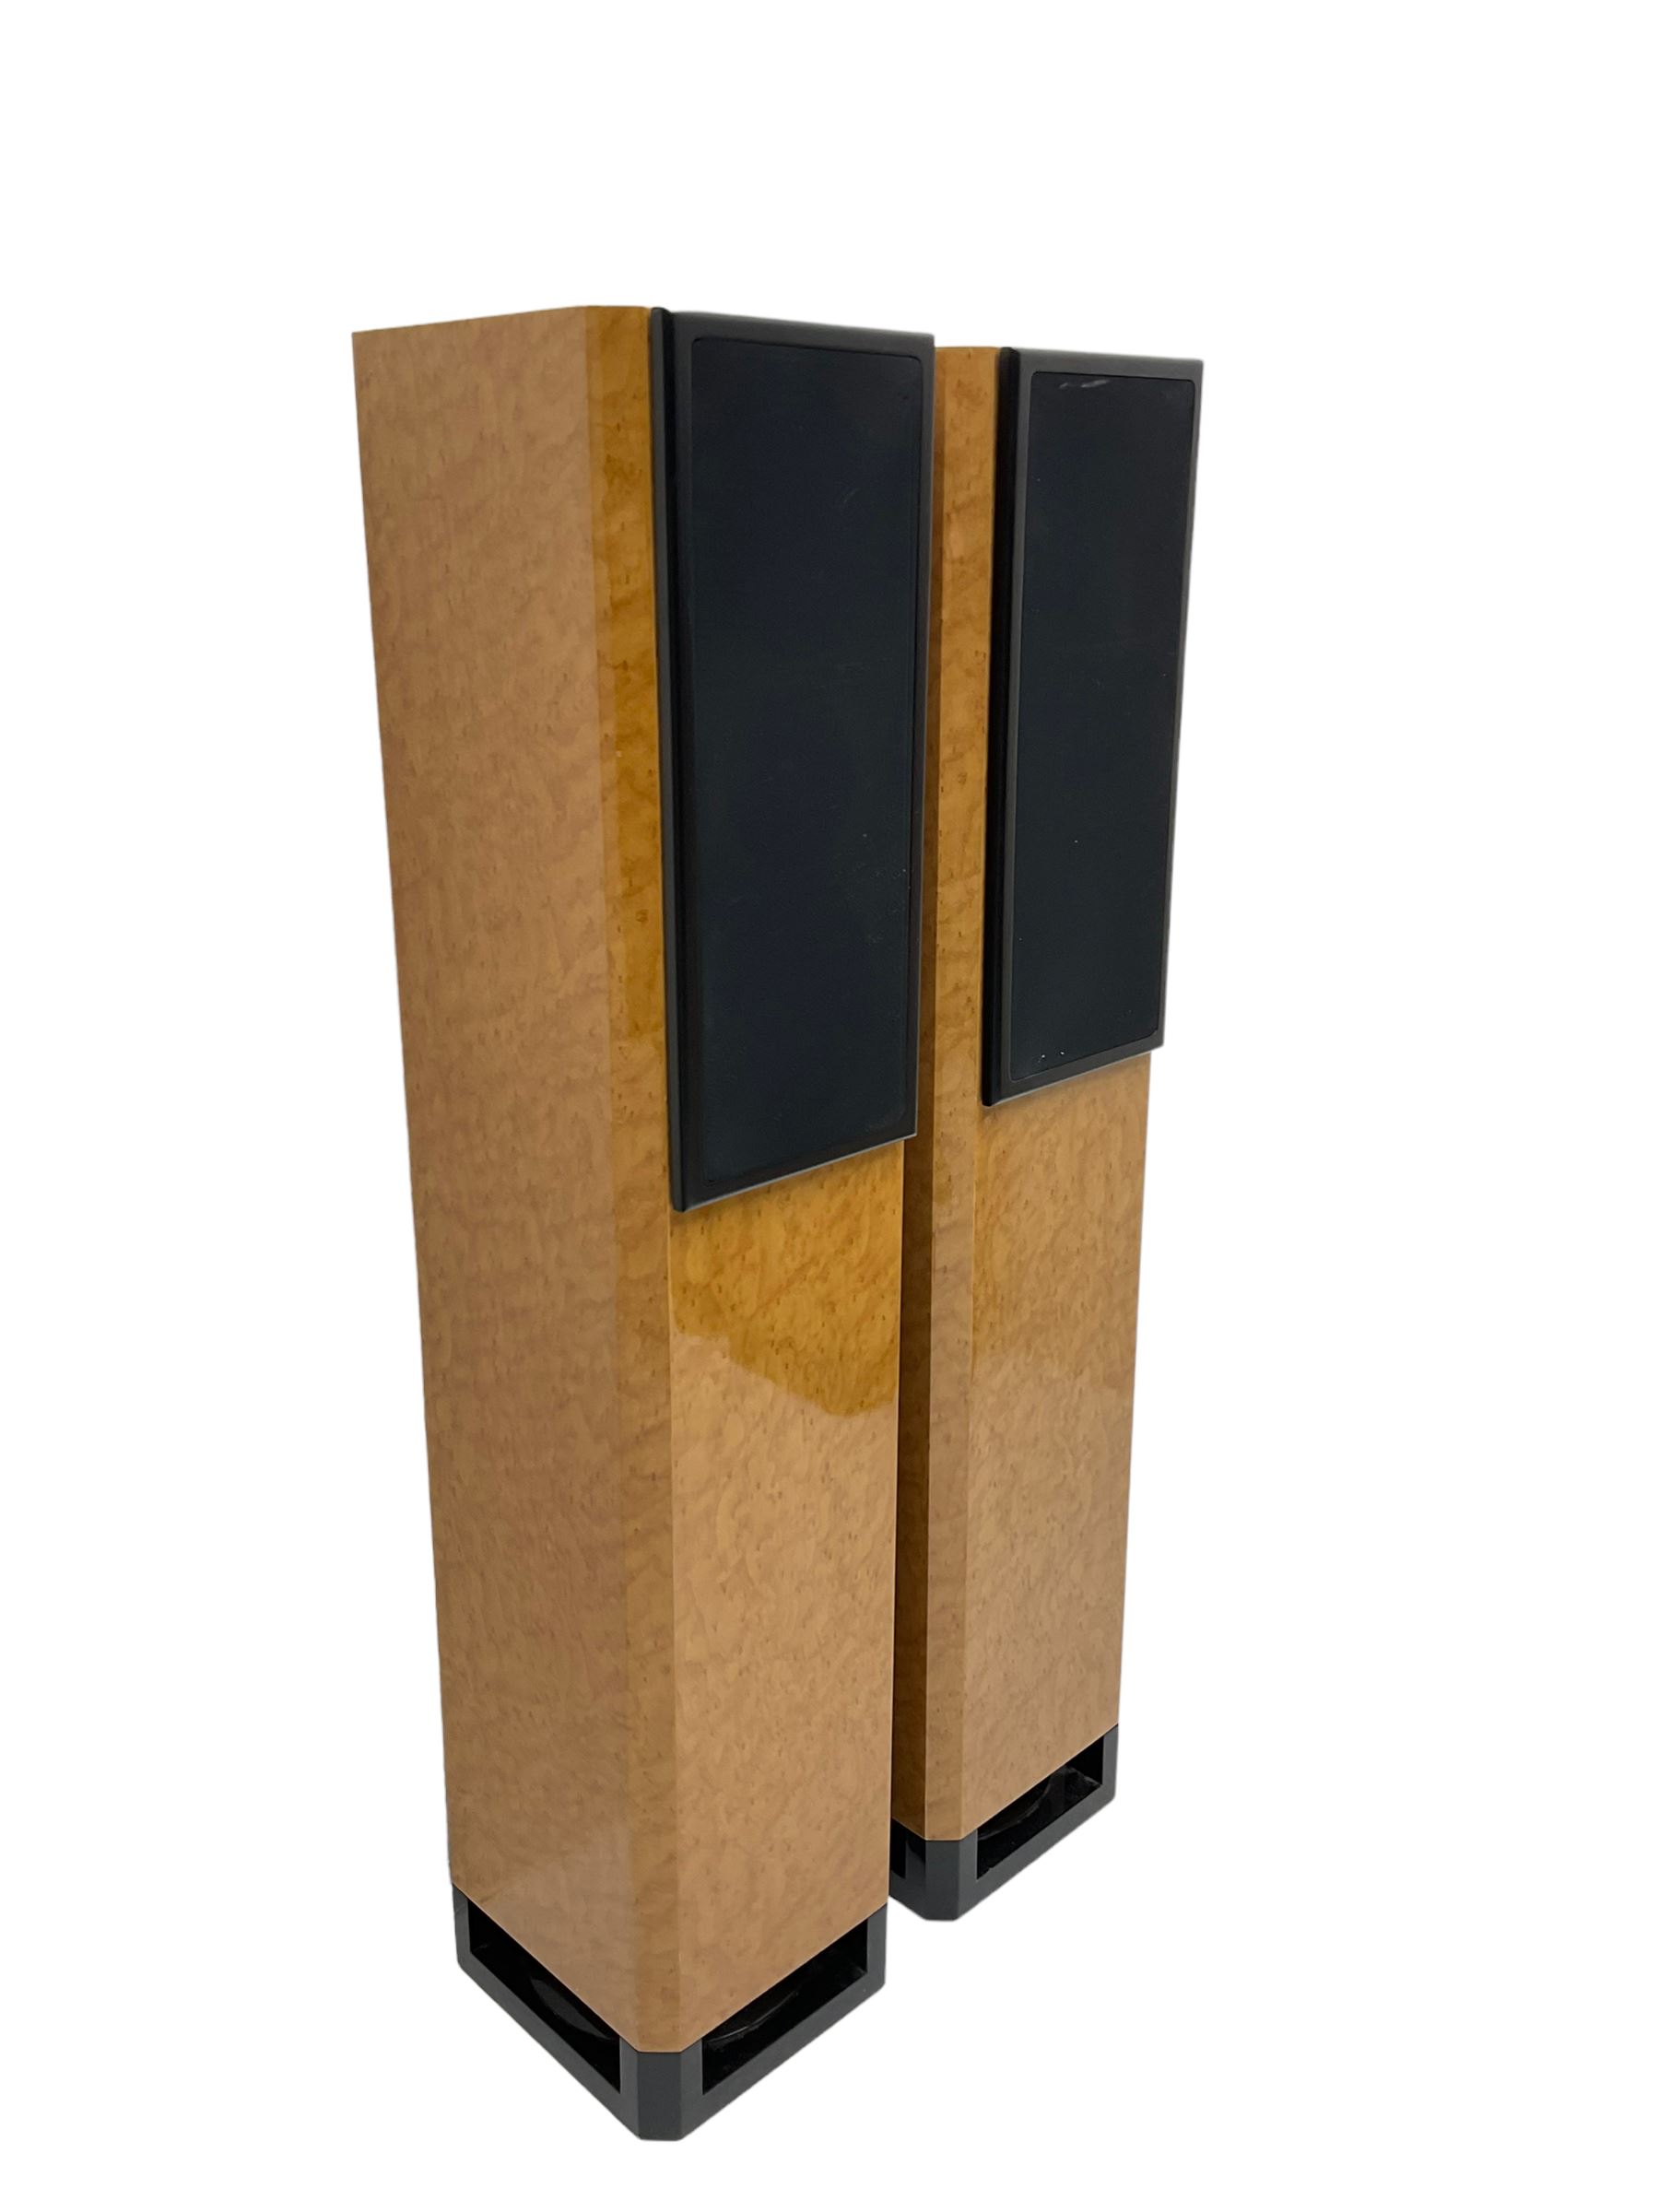 Pair Lake Audio 120W floorstanding speakers in maple finish - Image 3 of 6